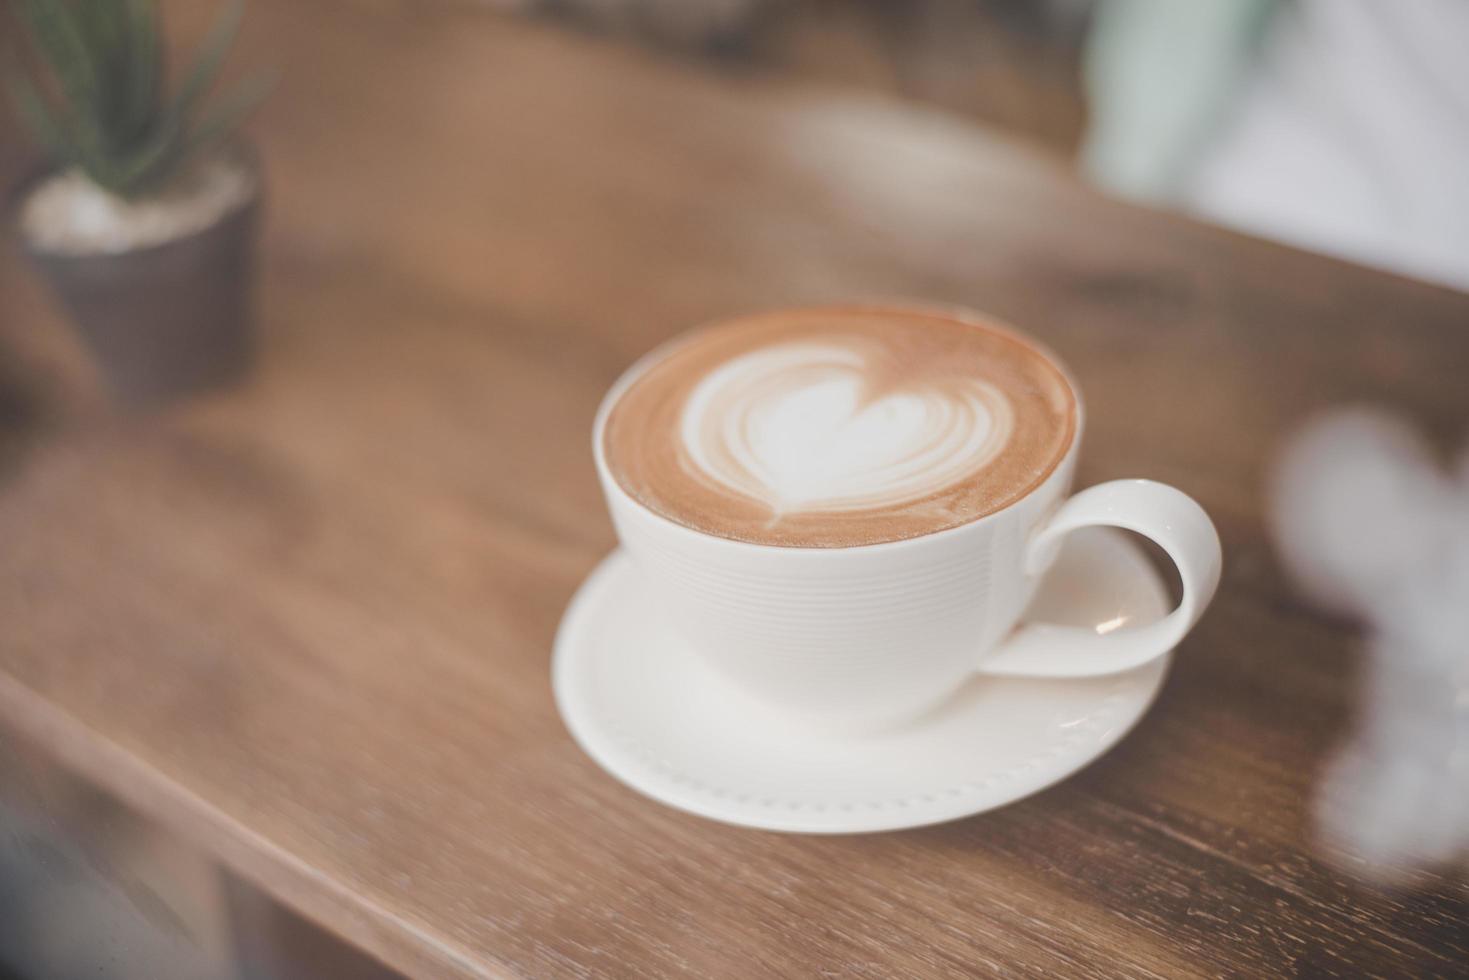 Hot art latte coffee with heart shape photo